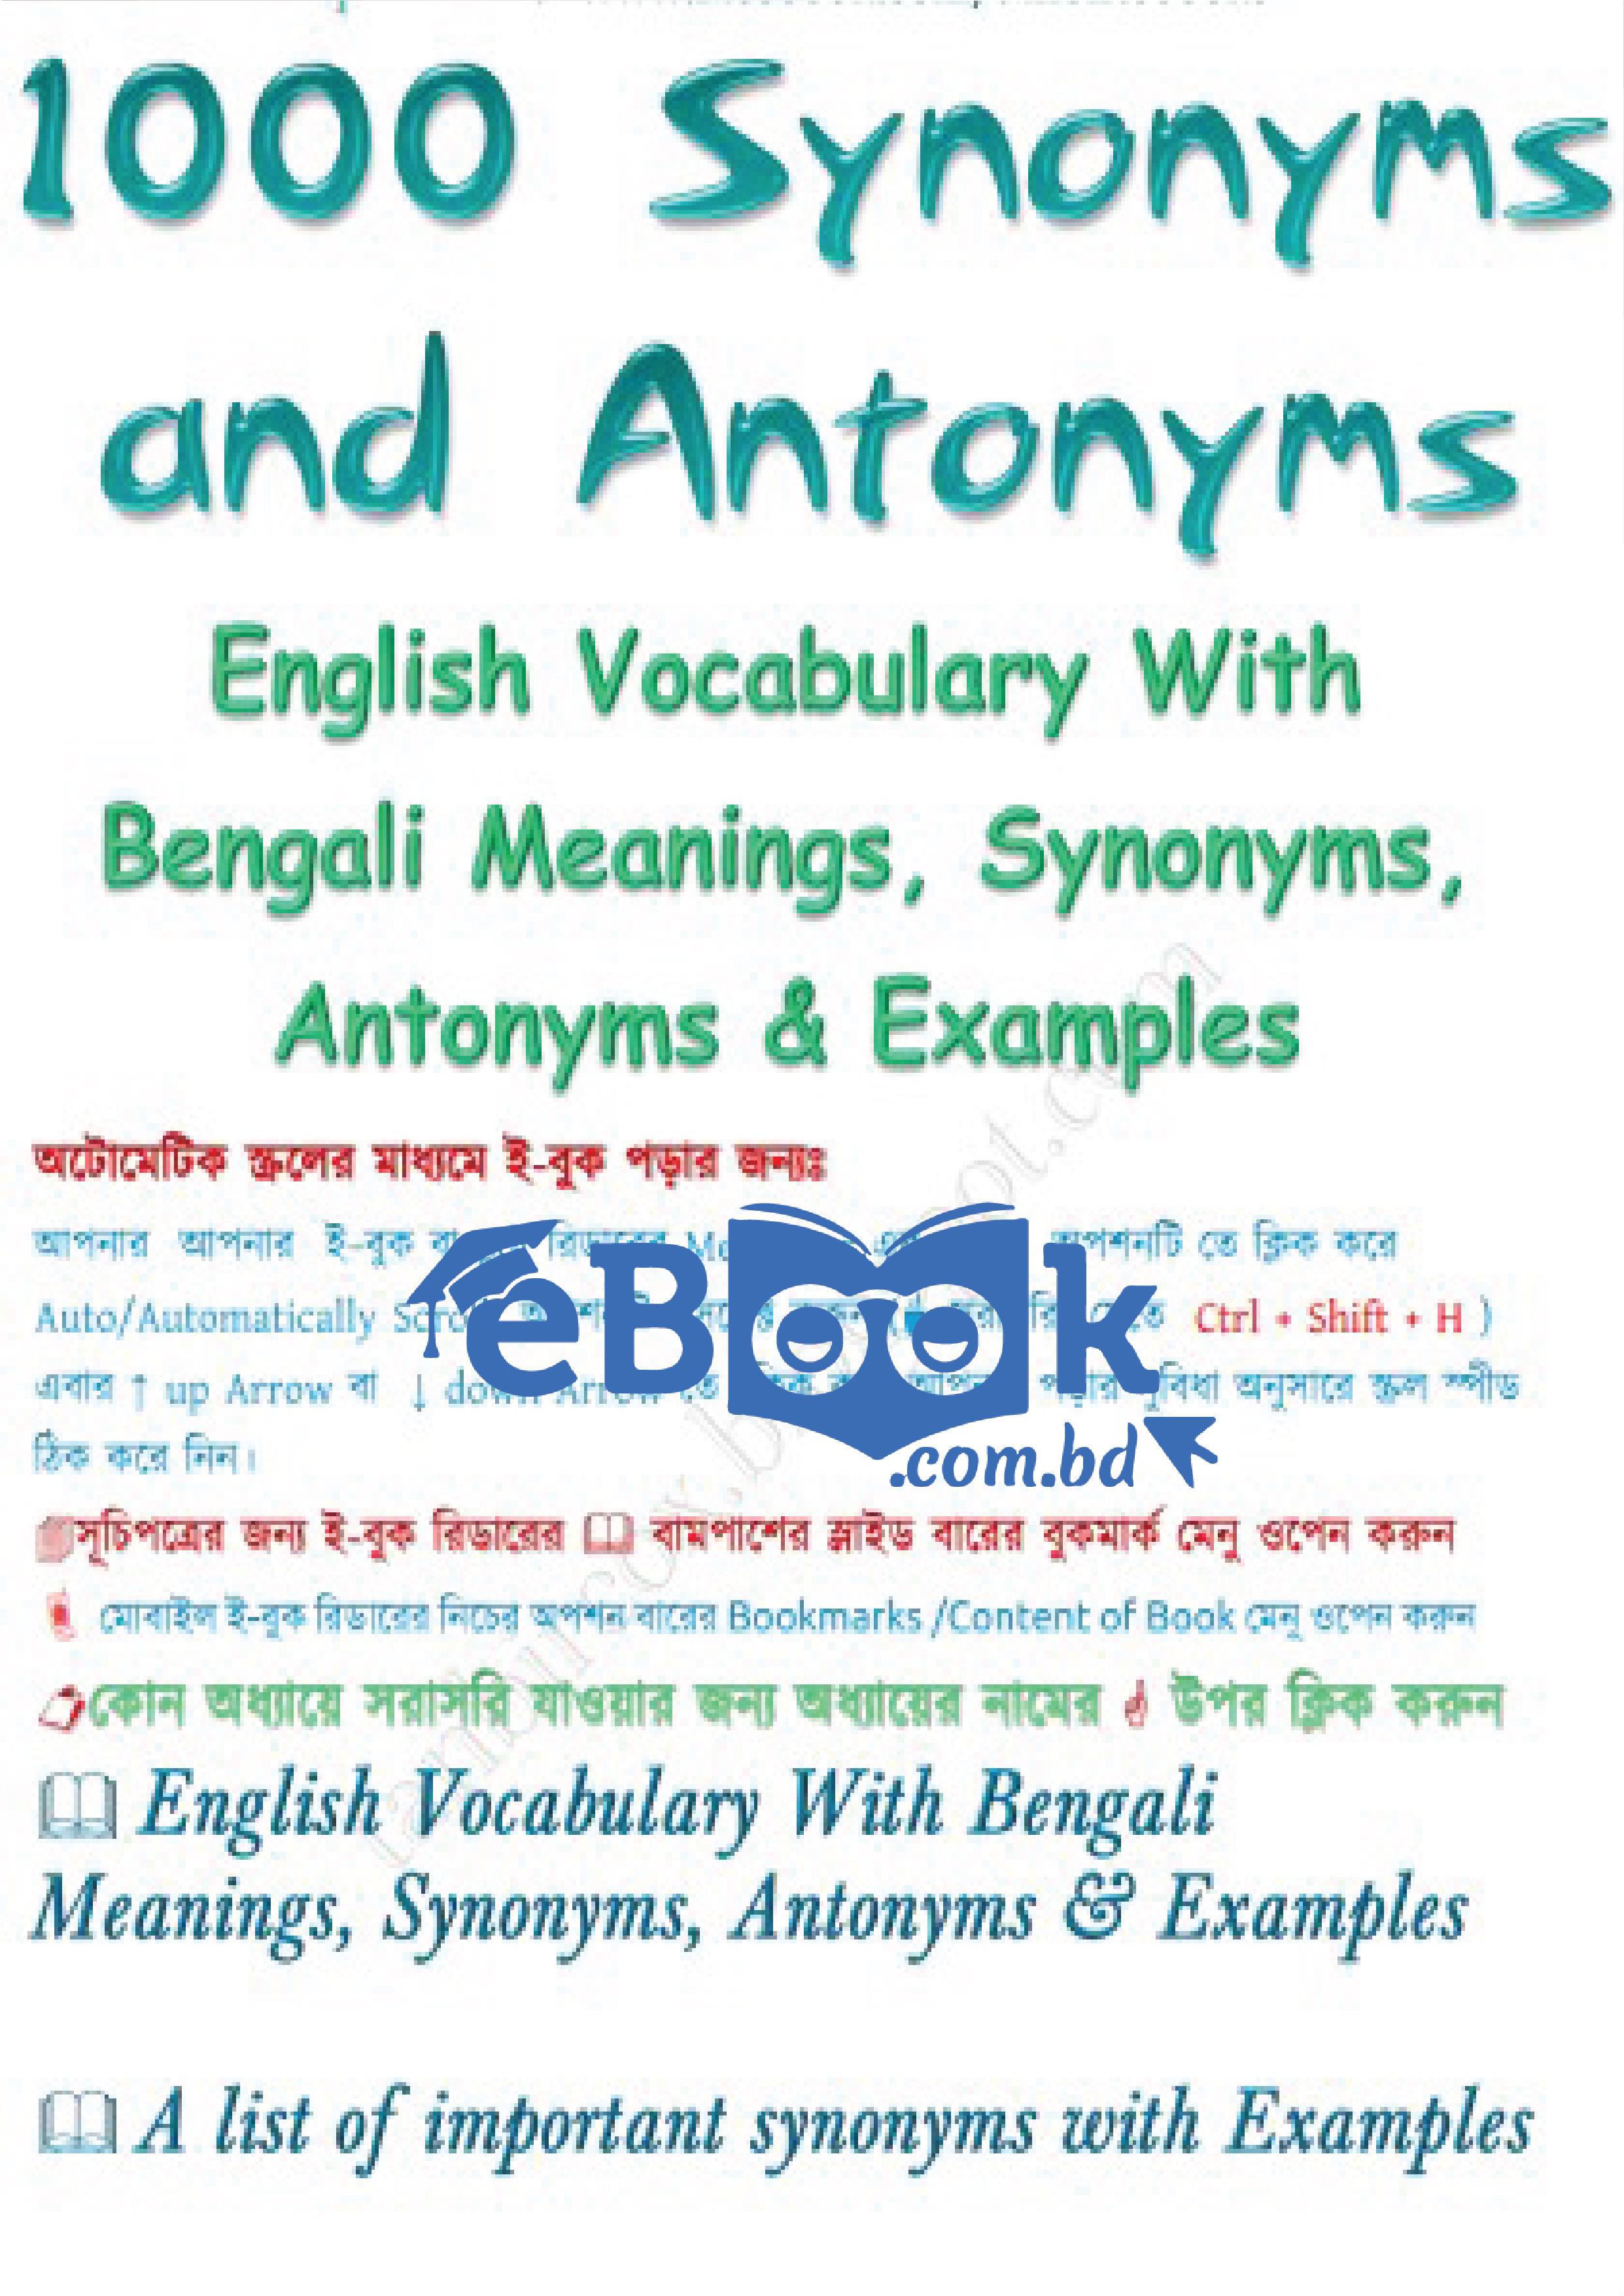 1000 Synonyms and Antonyms - ১০০০ সমার্থক এবং বিপরীতার্থক শব্দ